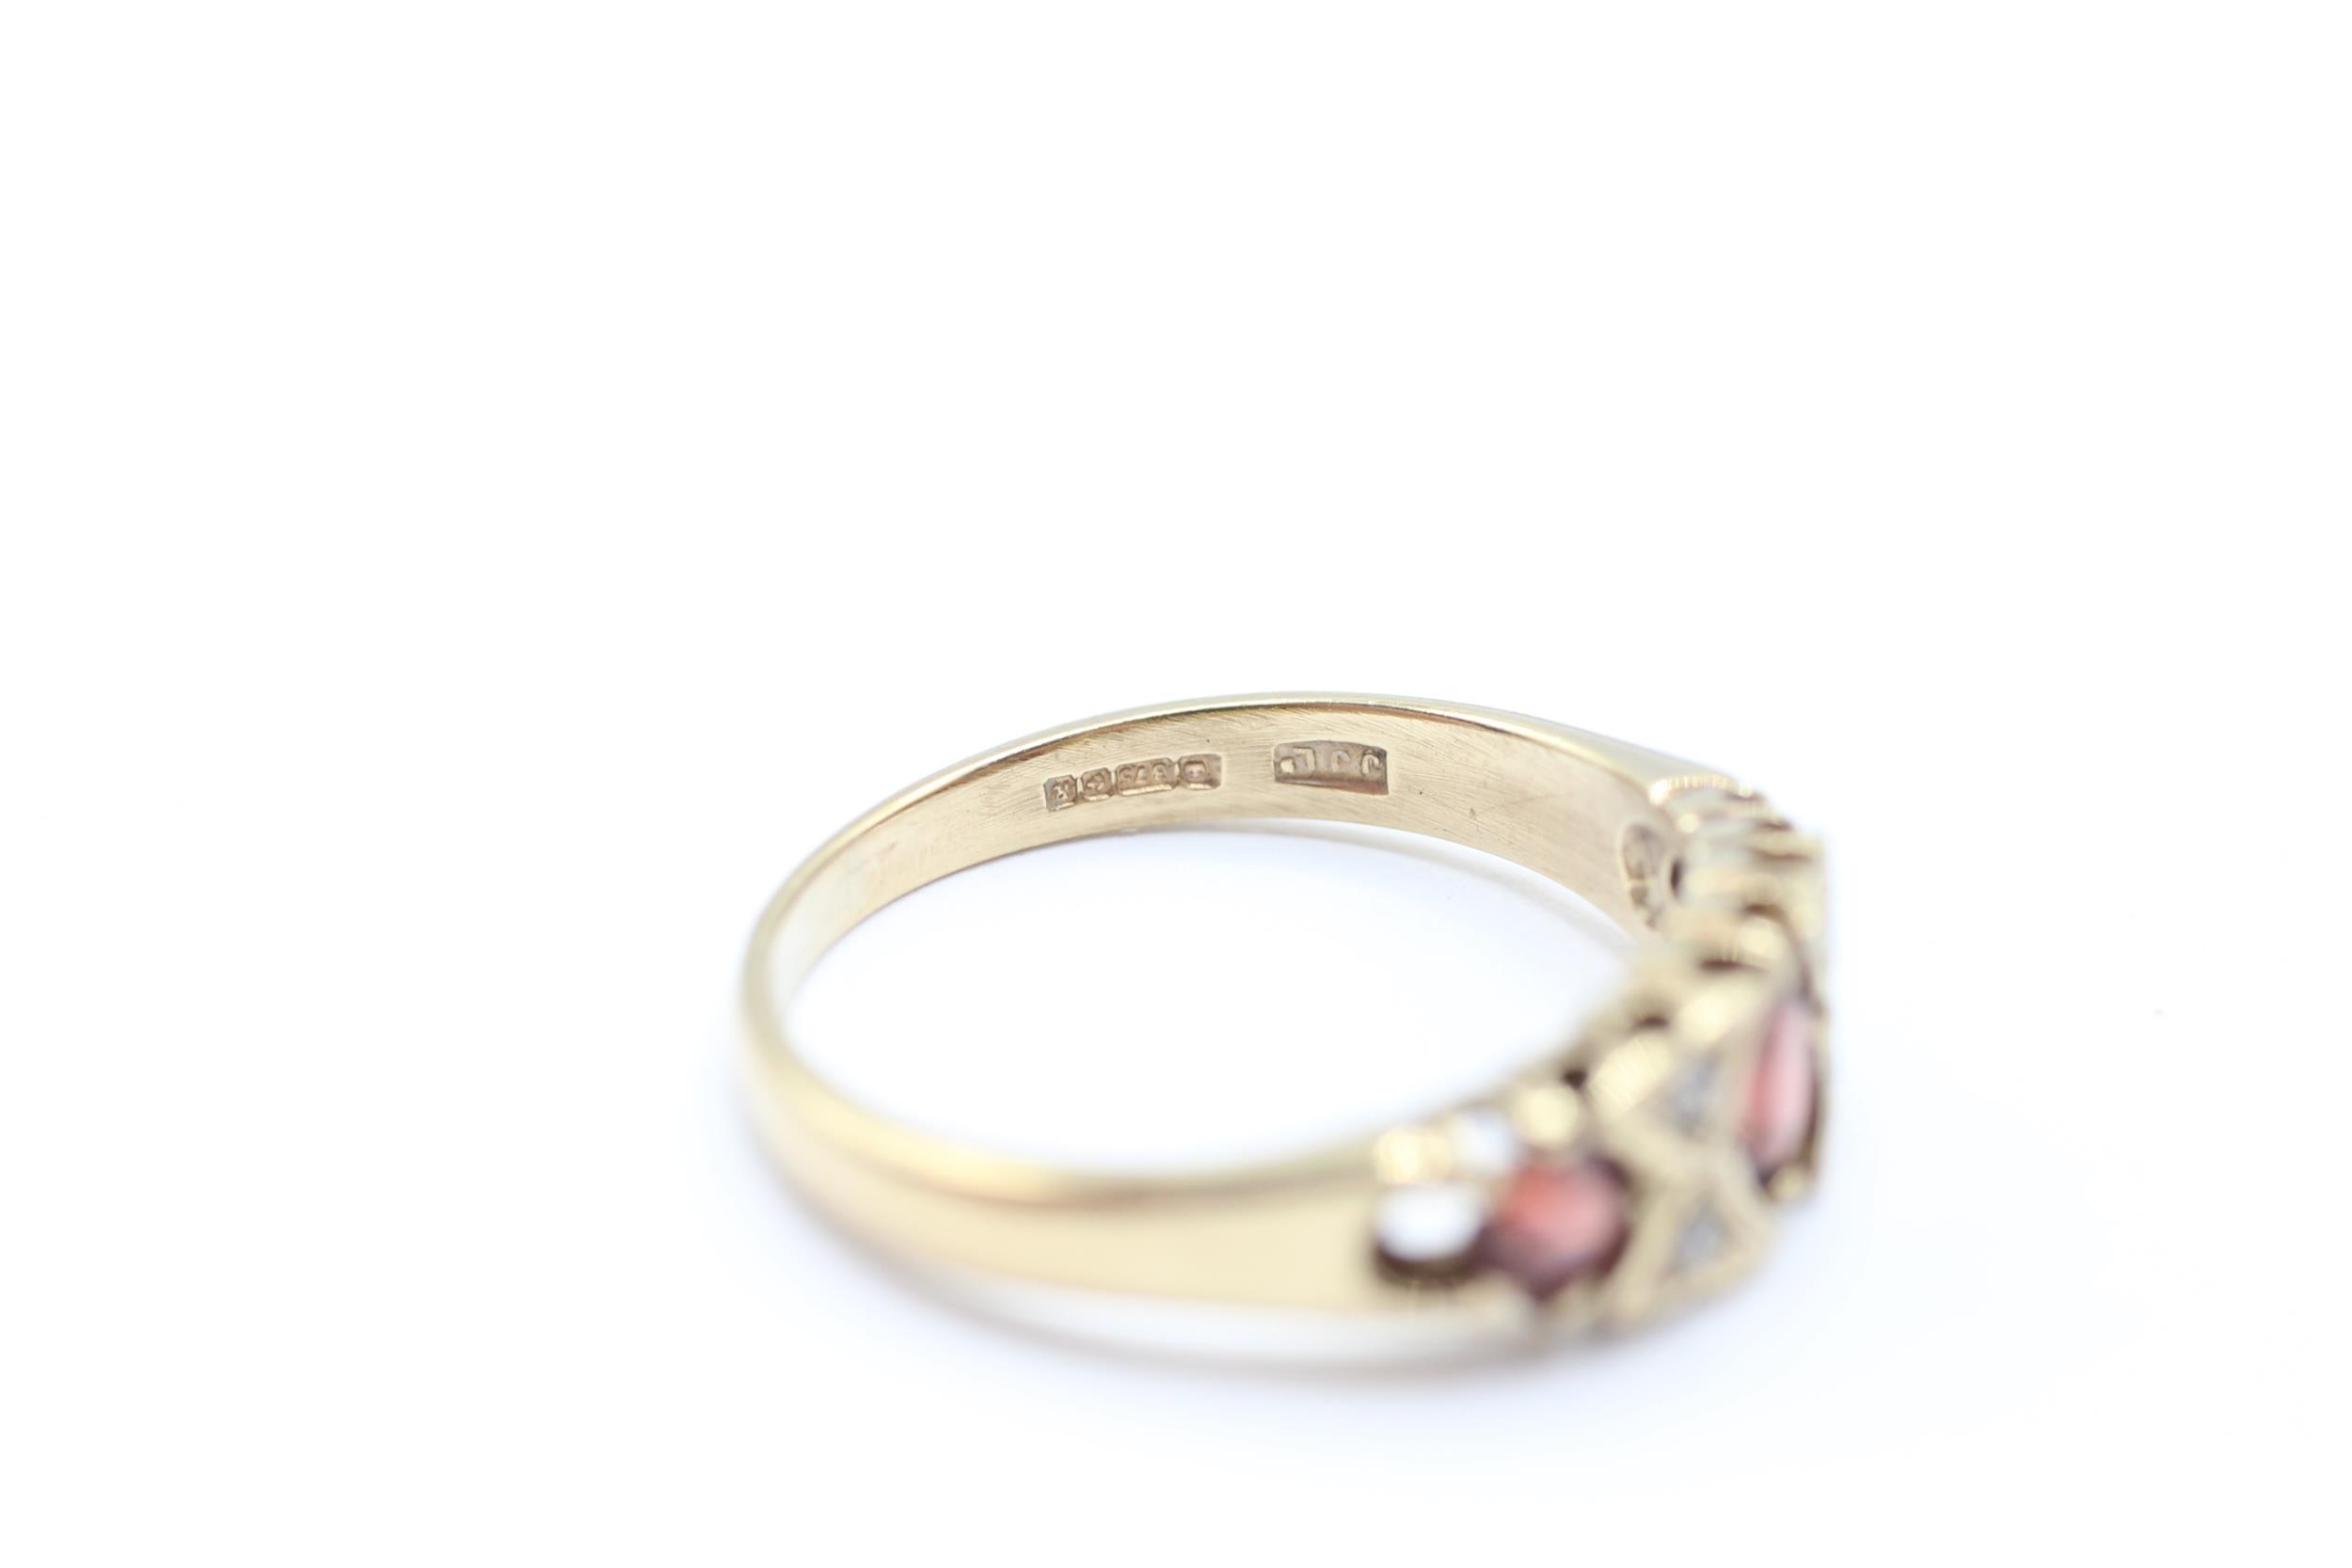 9ct gold vintage garnet & white gemstone dress ring Size Q 1/2 - 3 g - Image 3 of 5